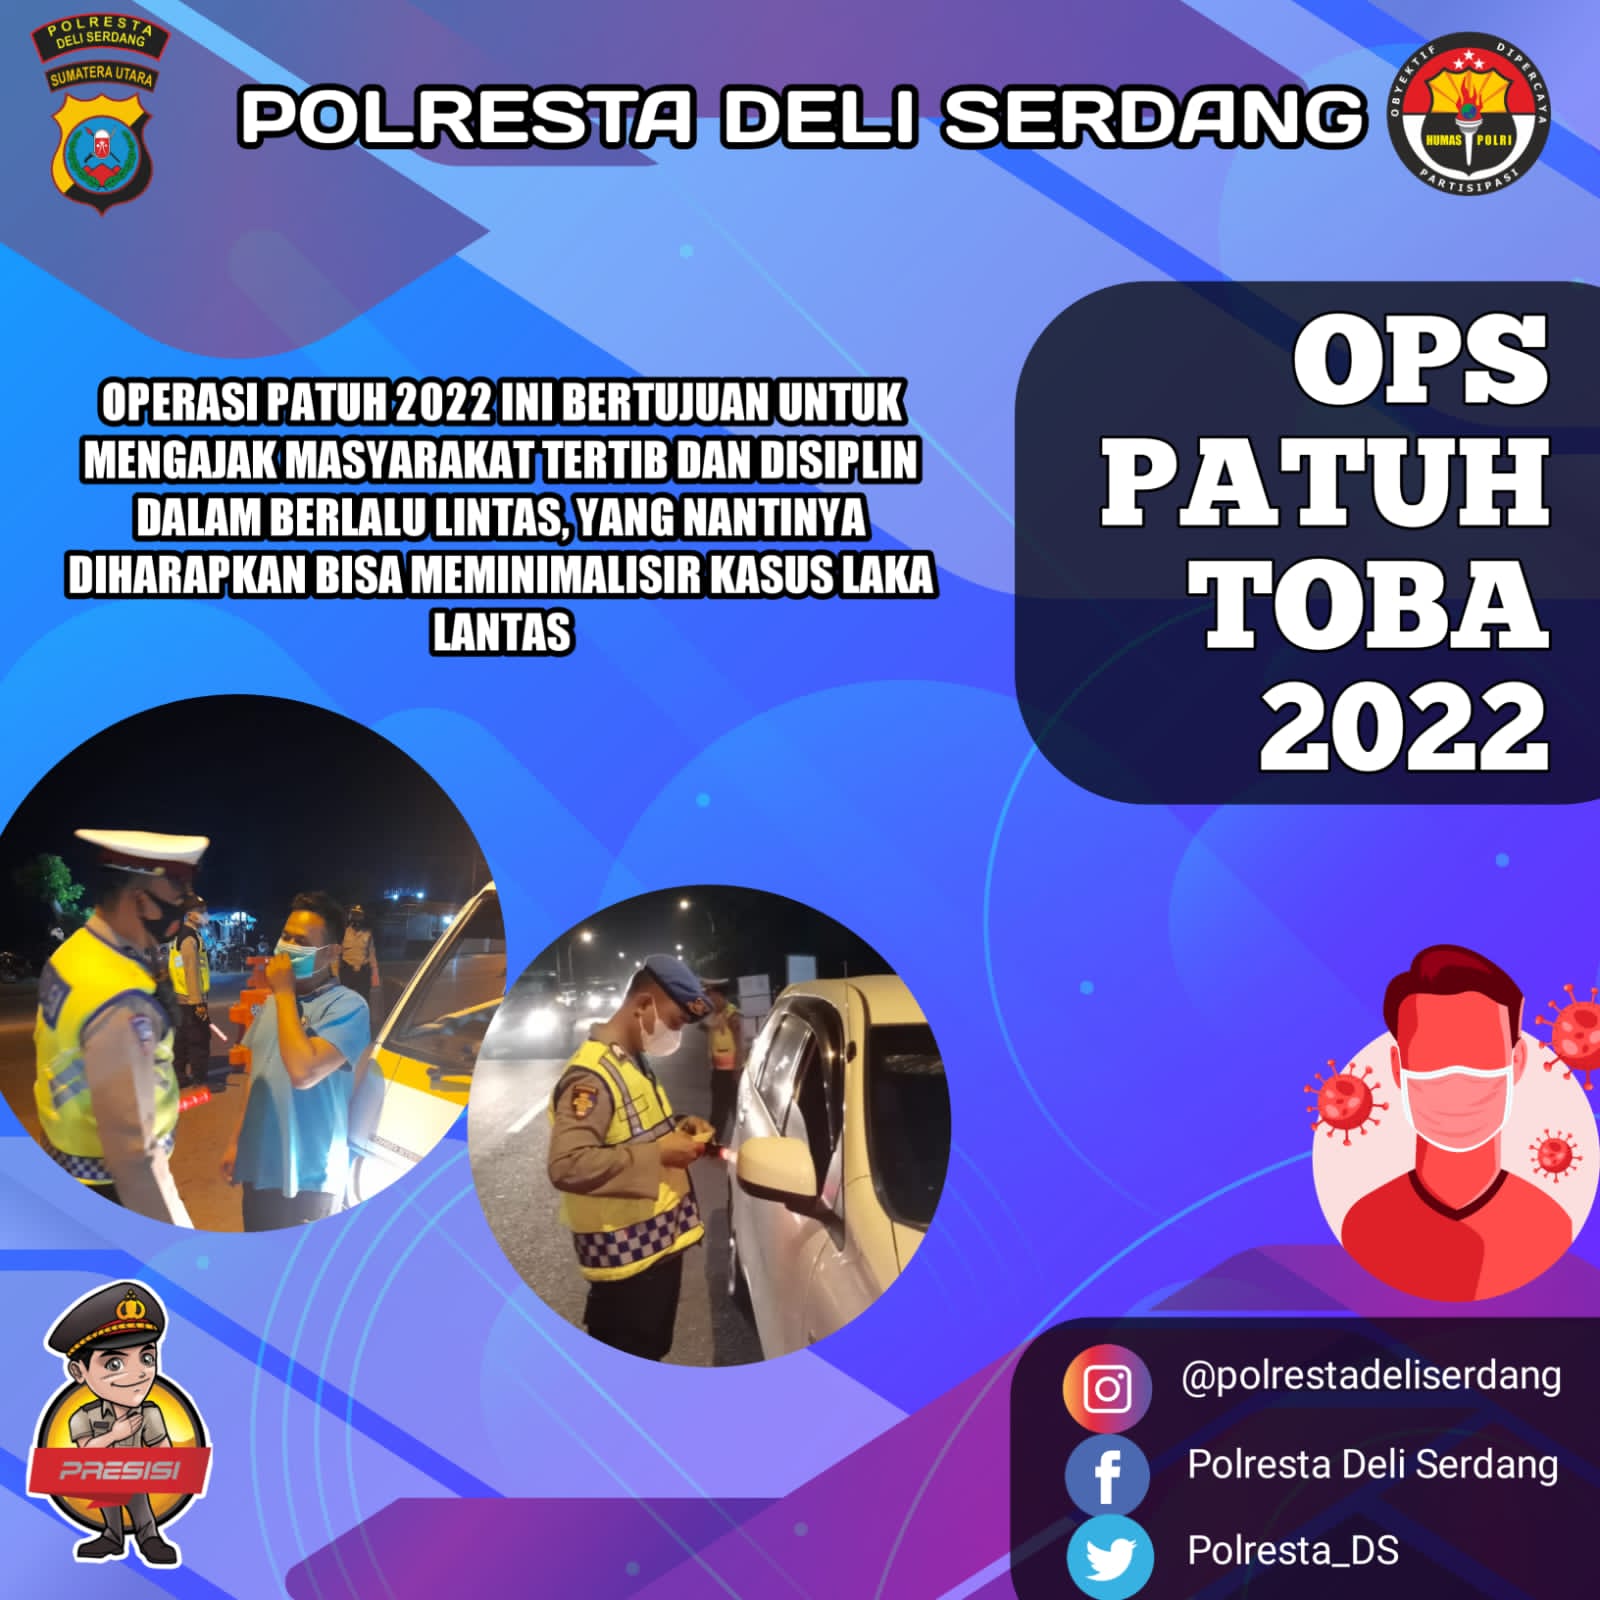 Polresta Deli Serdang Sosialisasikan Operasi Patuh Toba-2022 Lewat Media Sosial